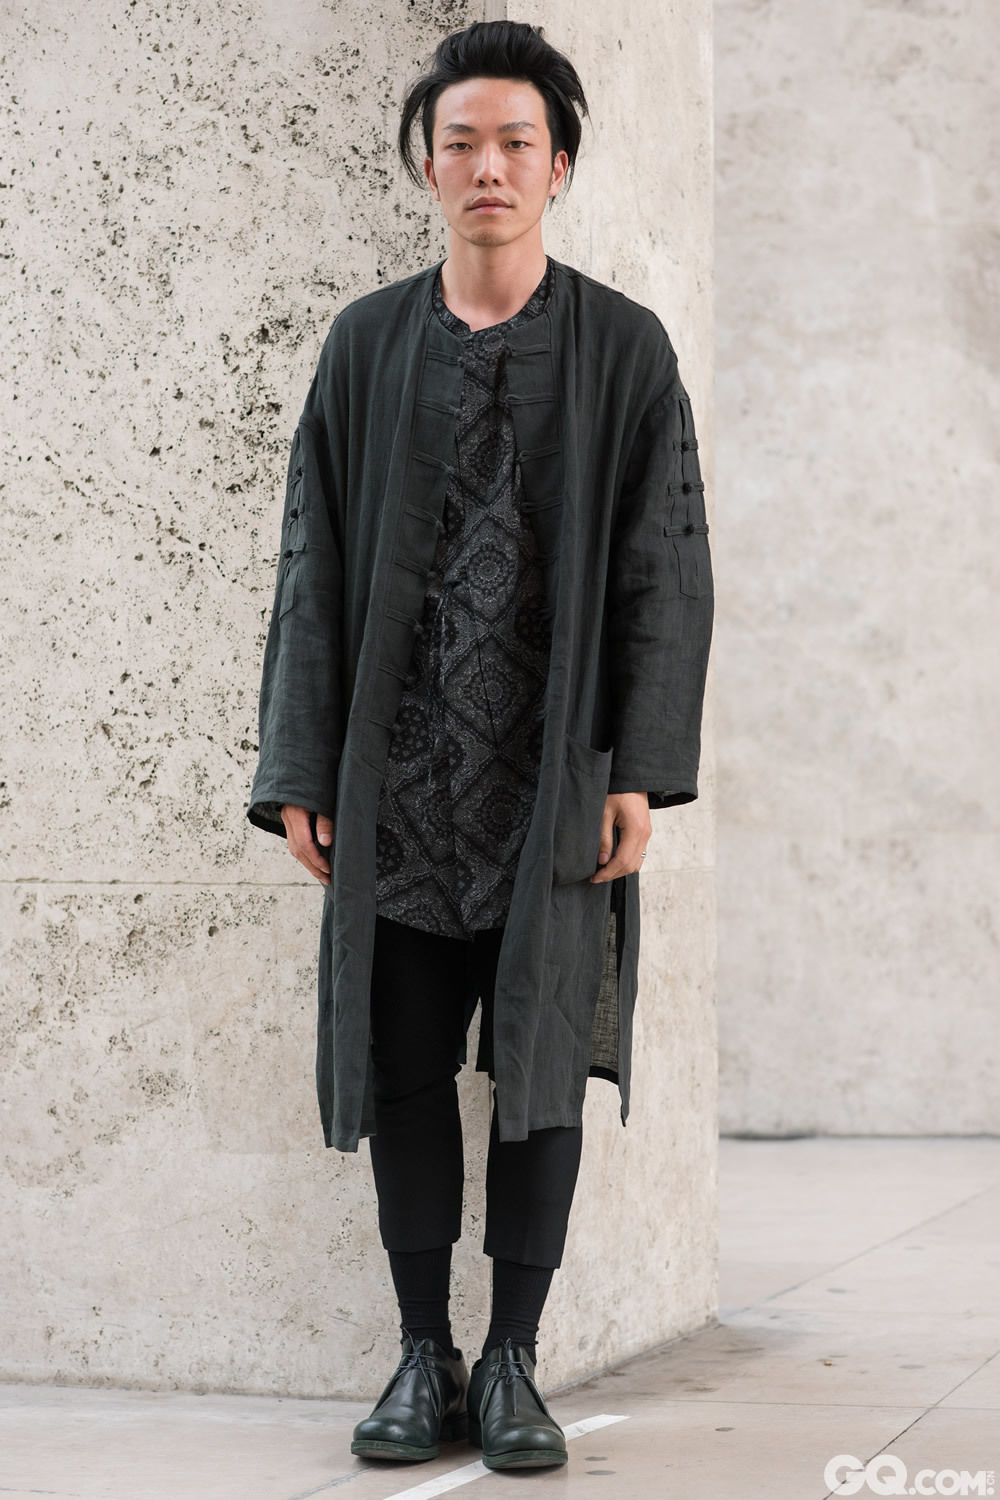 Wei
Jacket:  Yoji Yamamoto 
Shirt: Yogi Yamamoto
Pants: Rag and bone
Shoes: M.A. cross

Inspiration: Dark floral in a summerish way
（以夏天的方式盛开的暗黑印花）